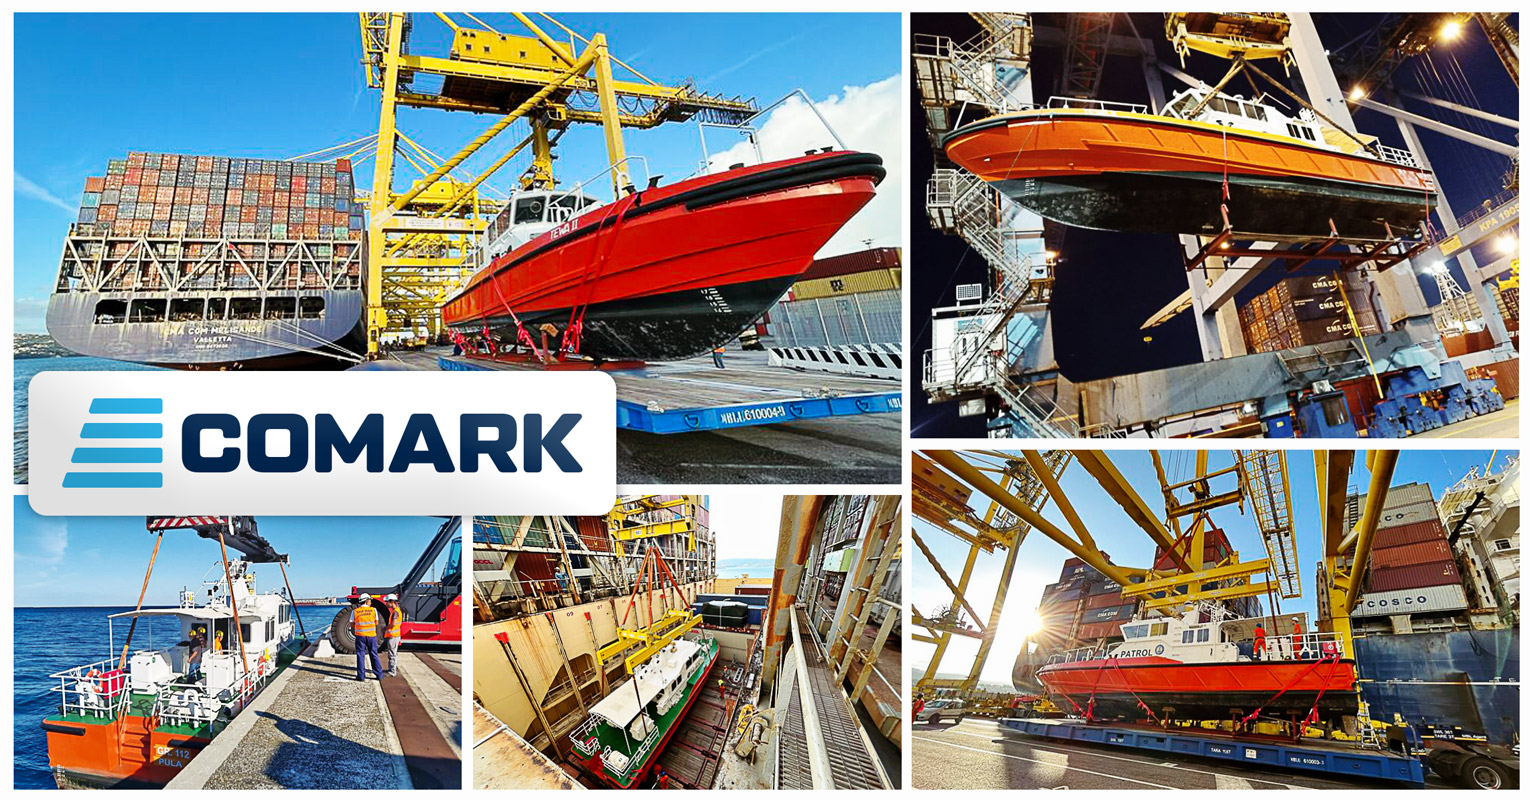 Comark Shipped a Patrol Boat via Breakbulk on CMA-CGM from Trieste to Mombasa